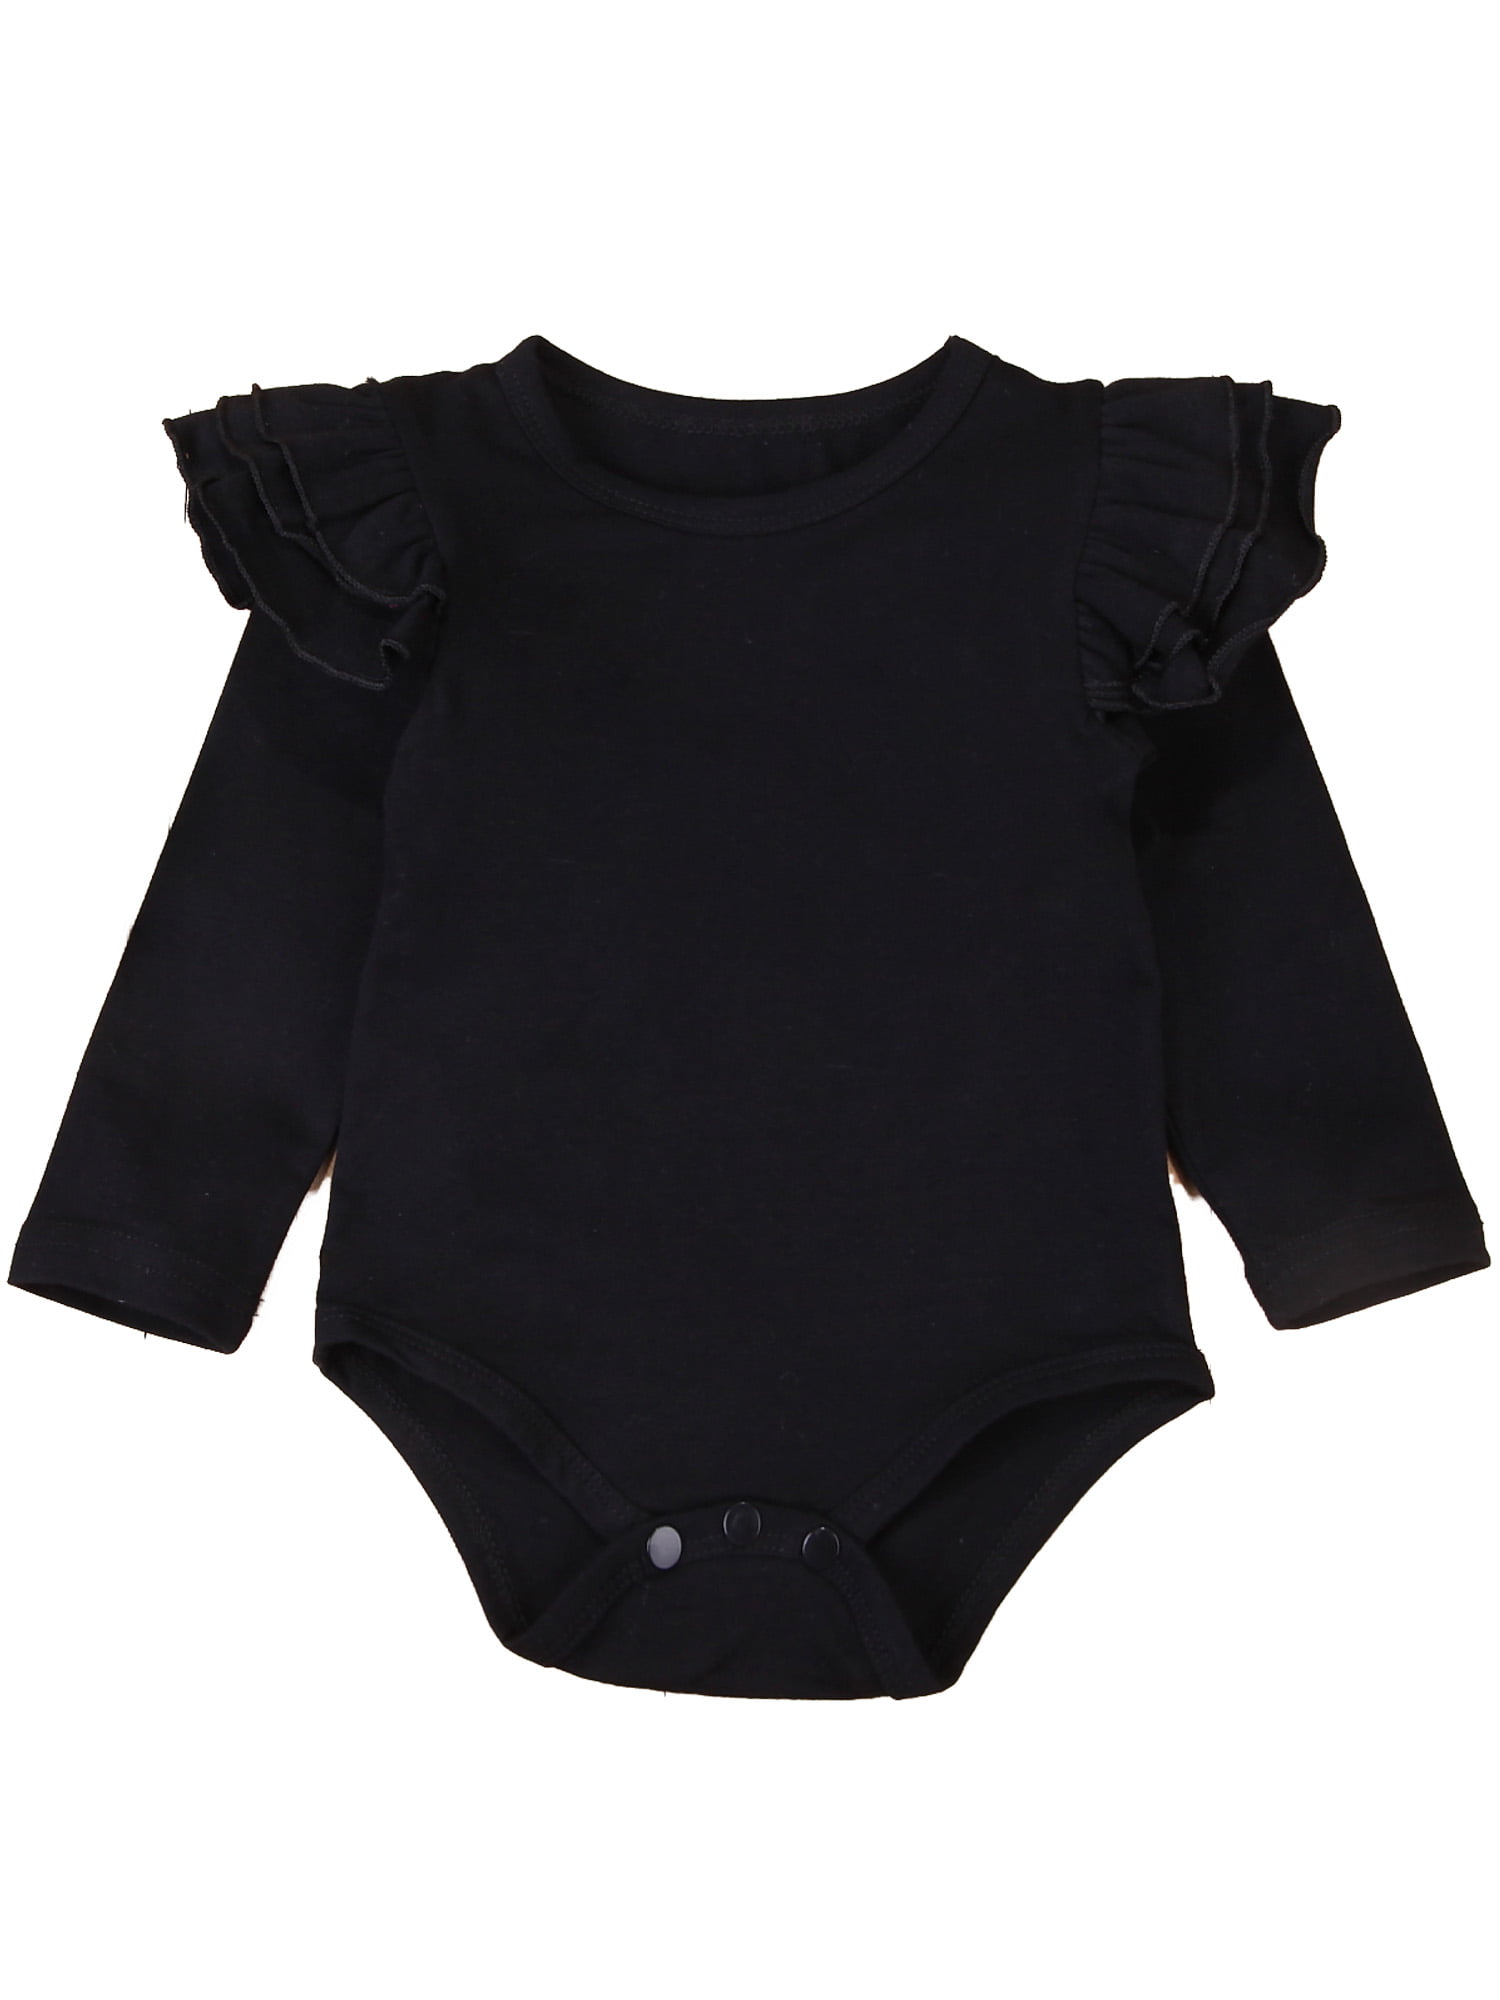 Toddler Infant Baby Boys&Girls Long Sleeve Ruffle Romper Bodysuit Clothes 